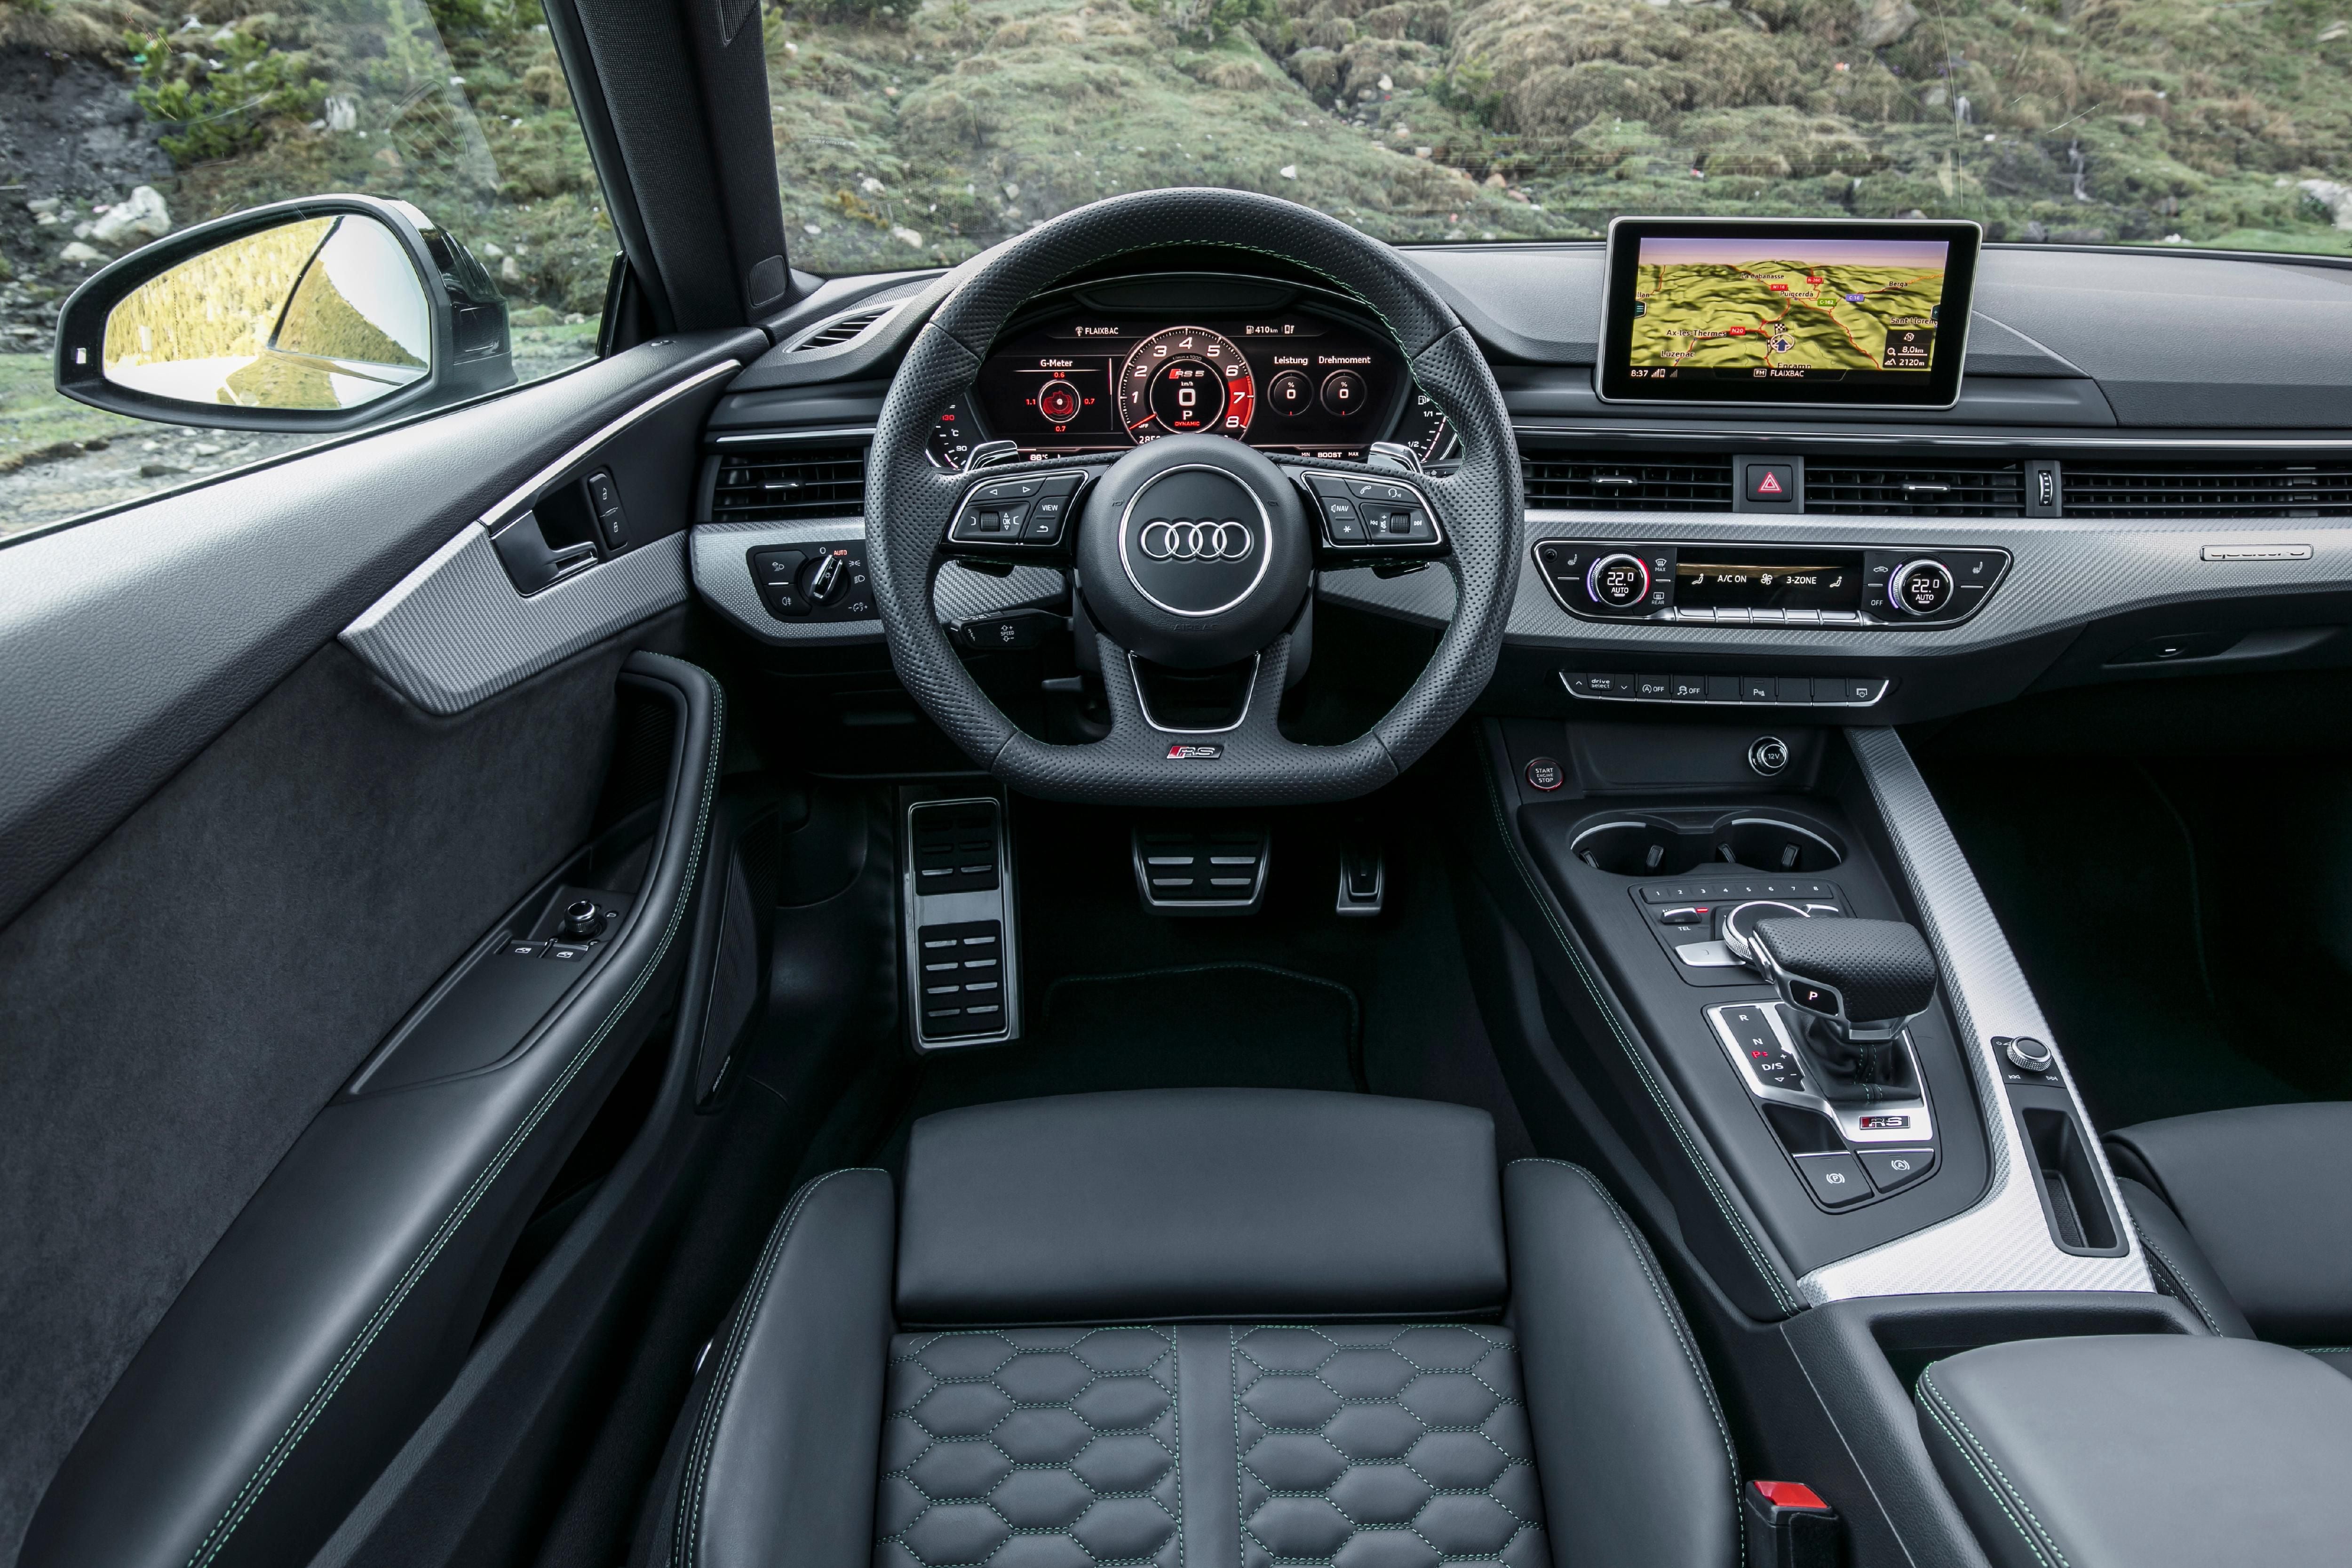 Next Audi A5 Sportback Caught Testing on the Road - Audi Club North America